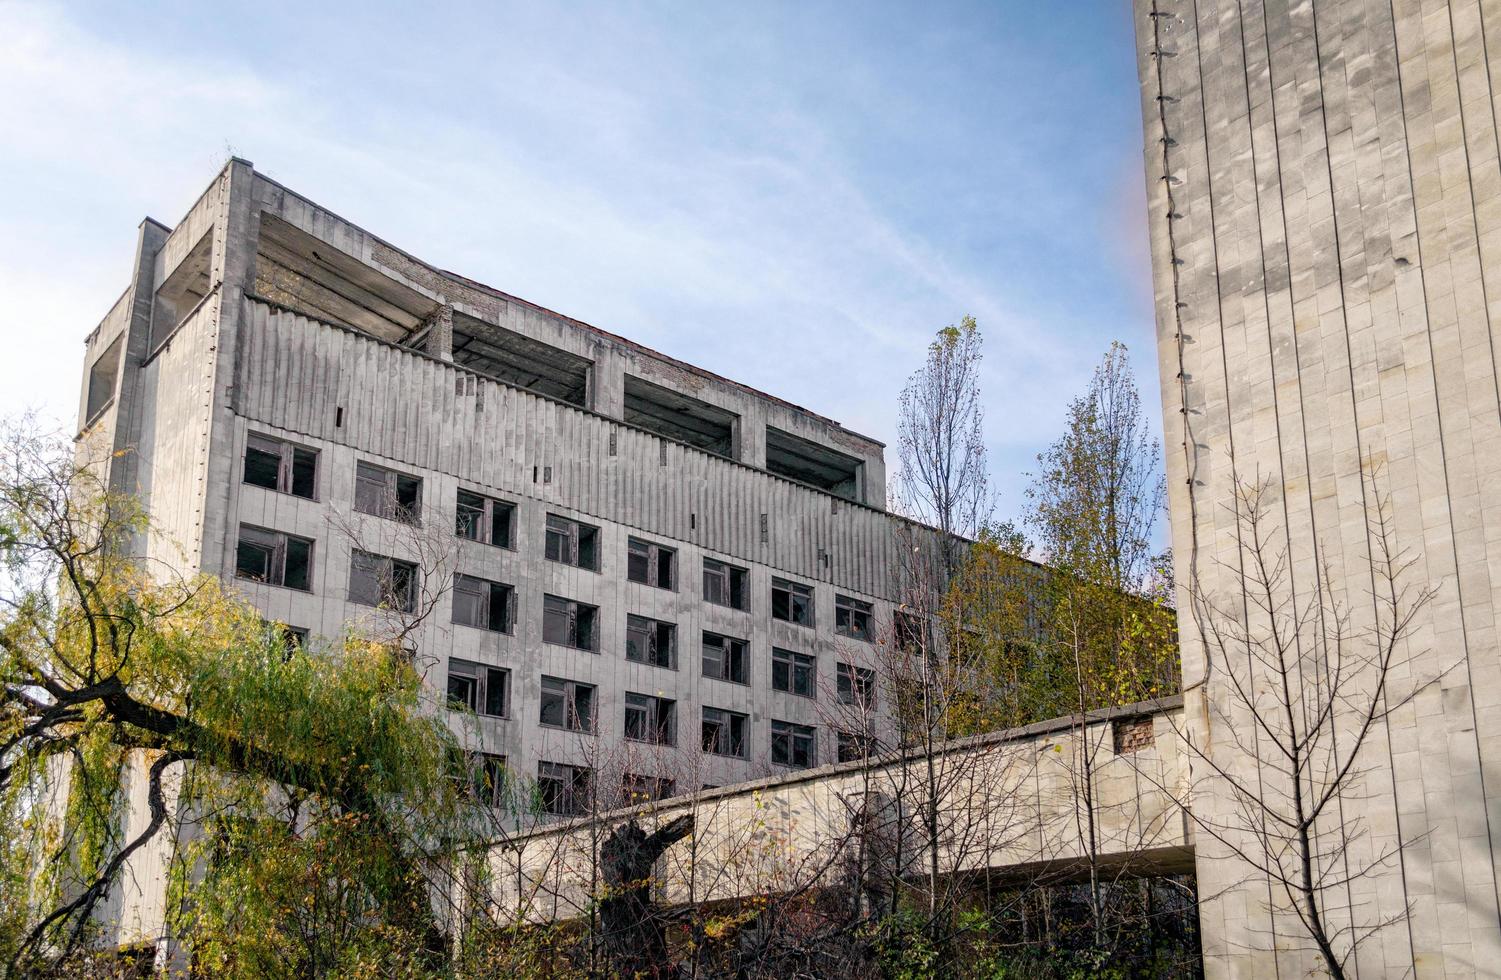 Pripyat, Ukraine, 2021 - Dilapidated hotel in Chernobyl photo